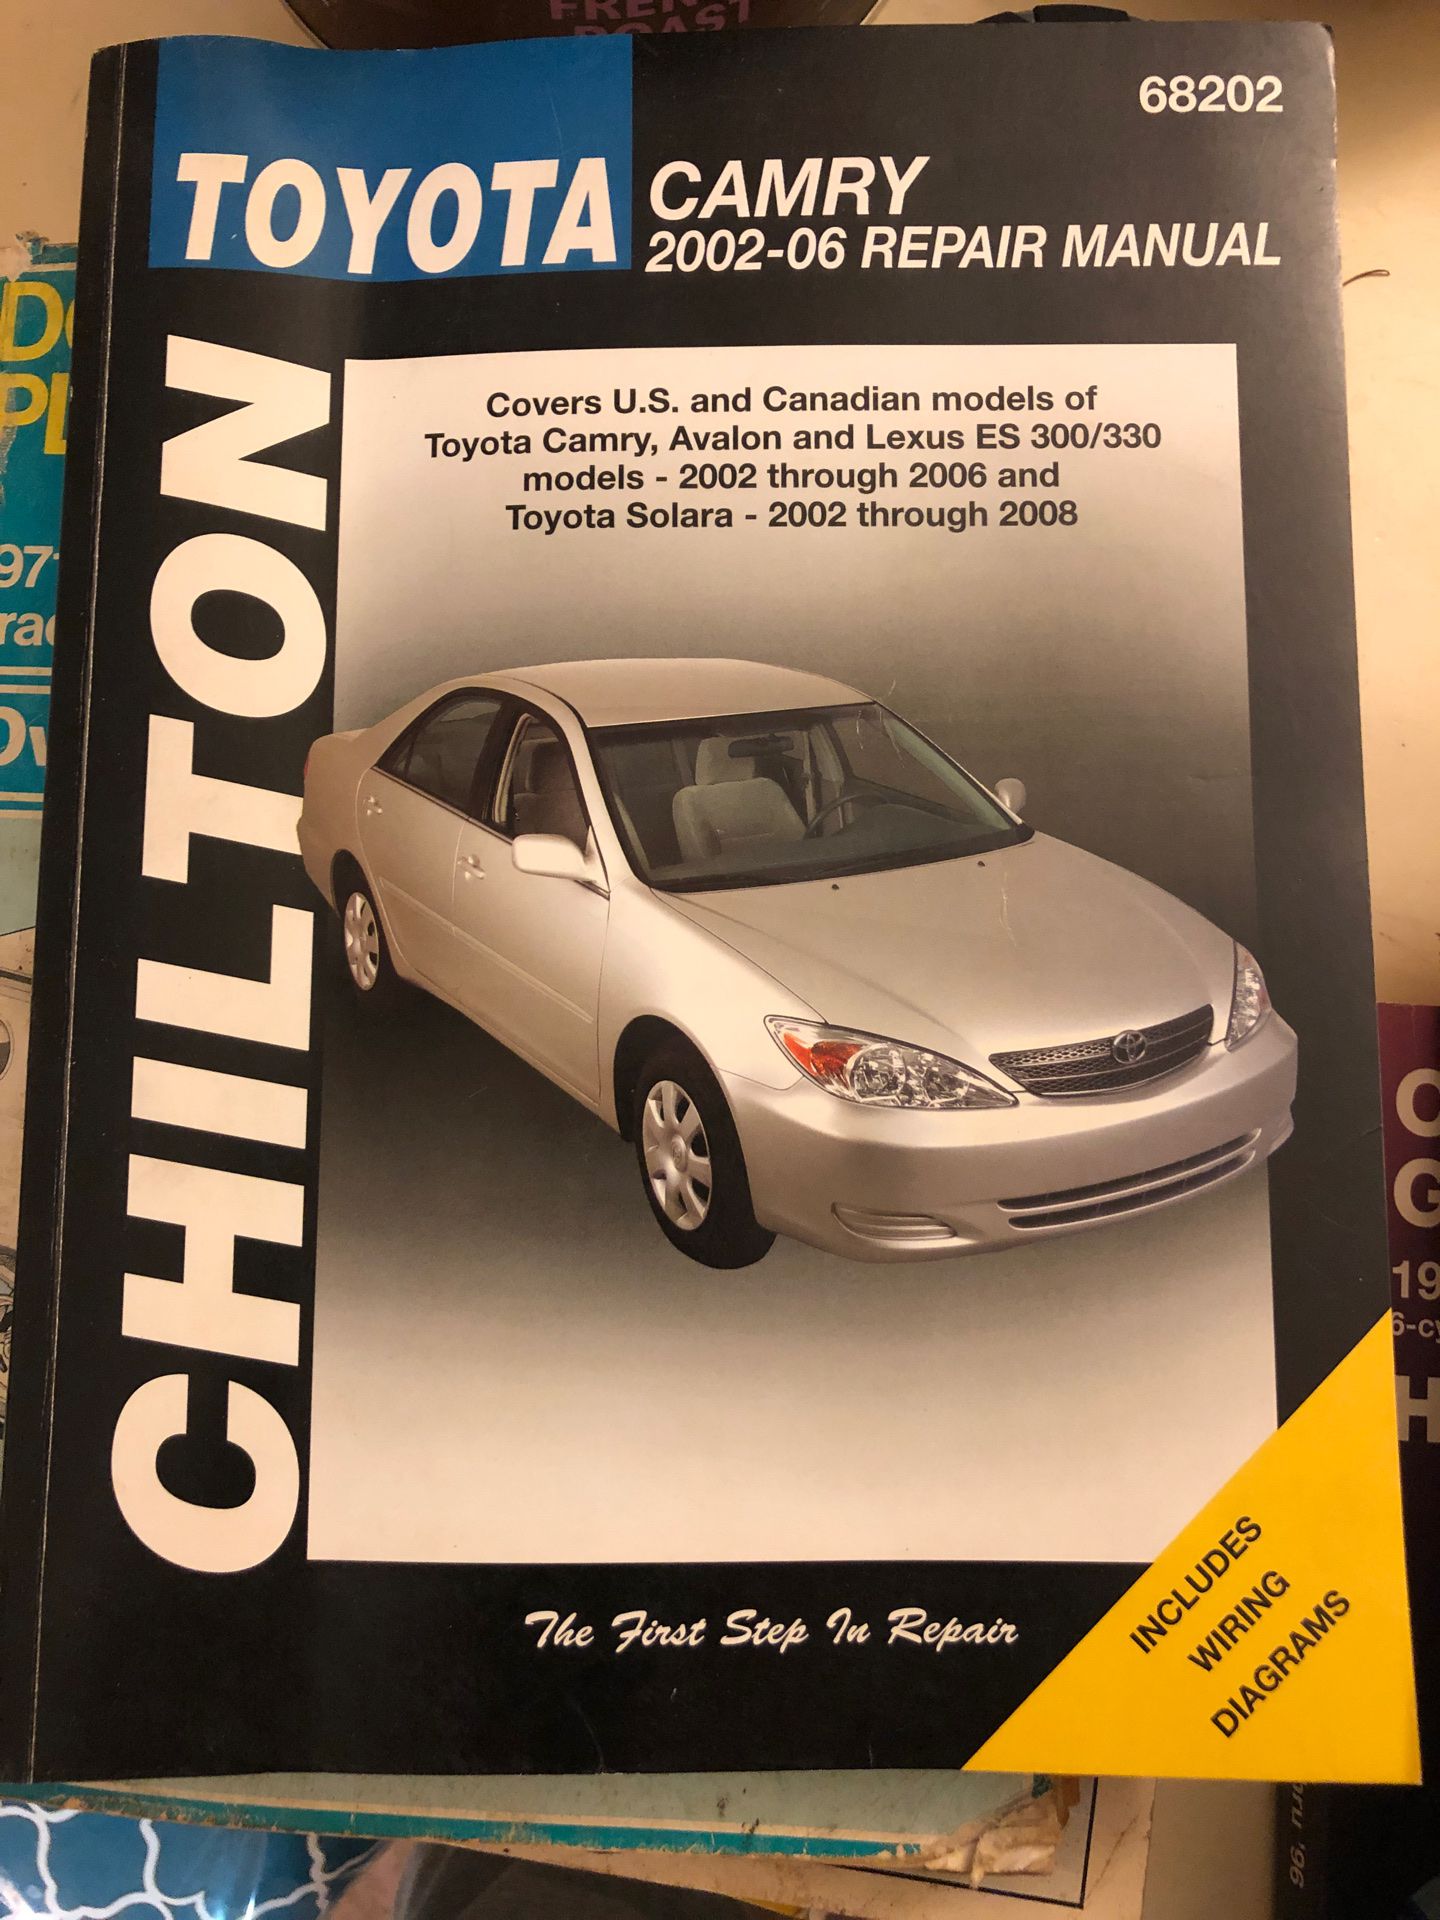 Chilton Toyota Camry 2002-06 repair manual